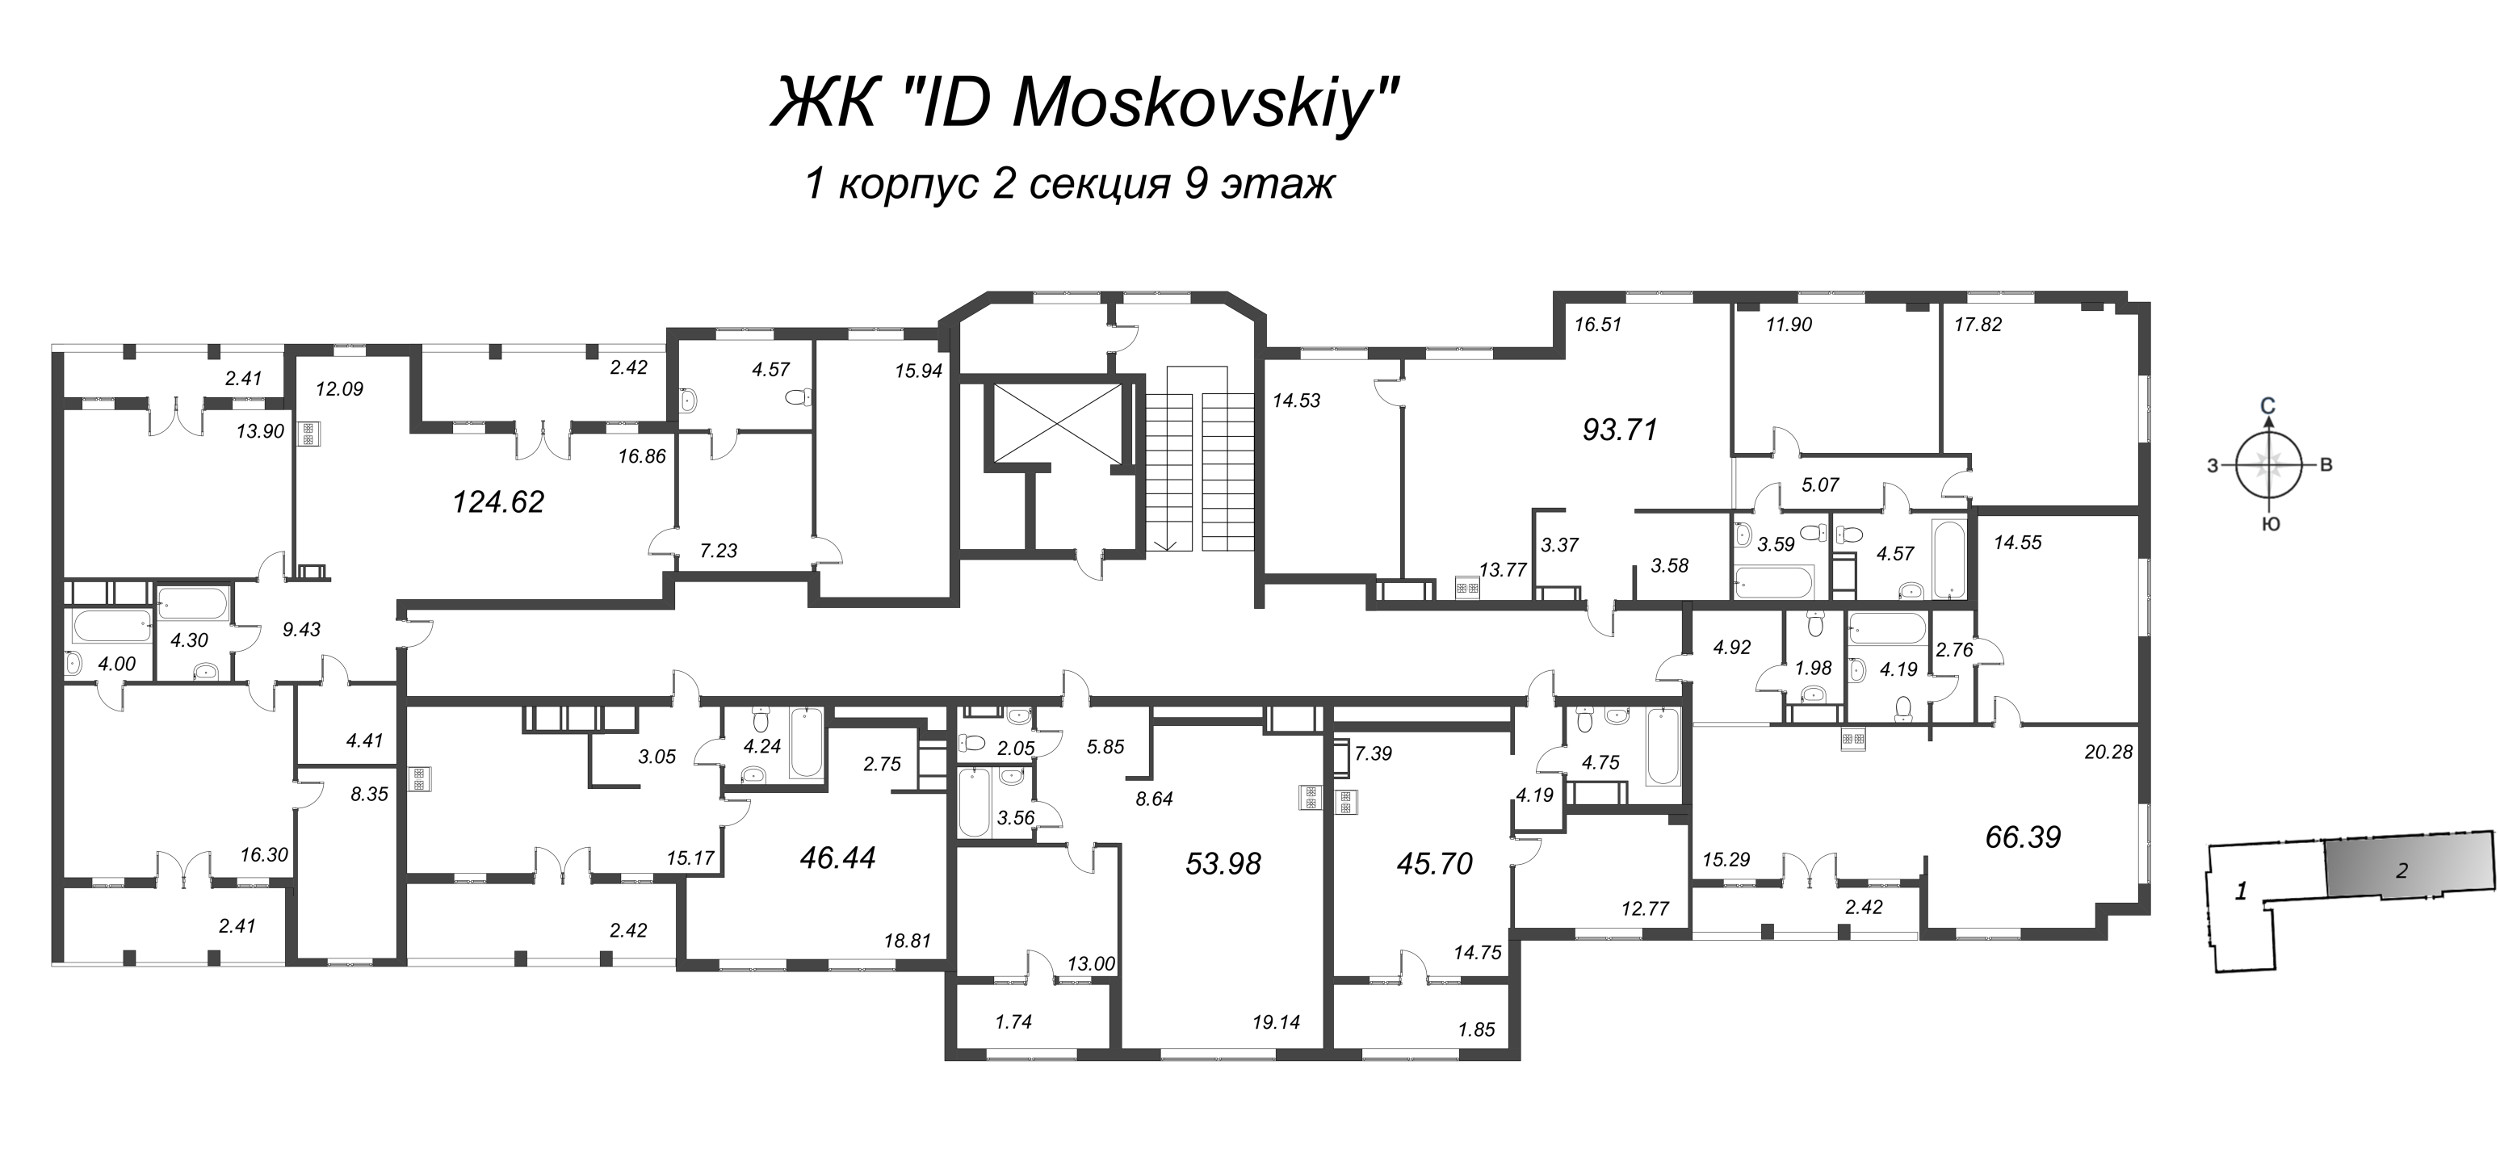 4-комнатная (Евро) квартира, 93.71 м² - планировка этажа